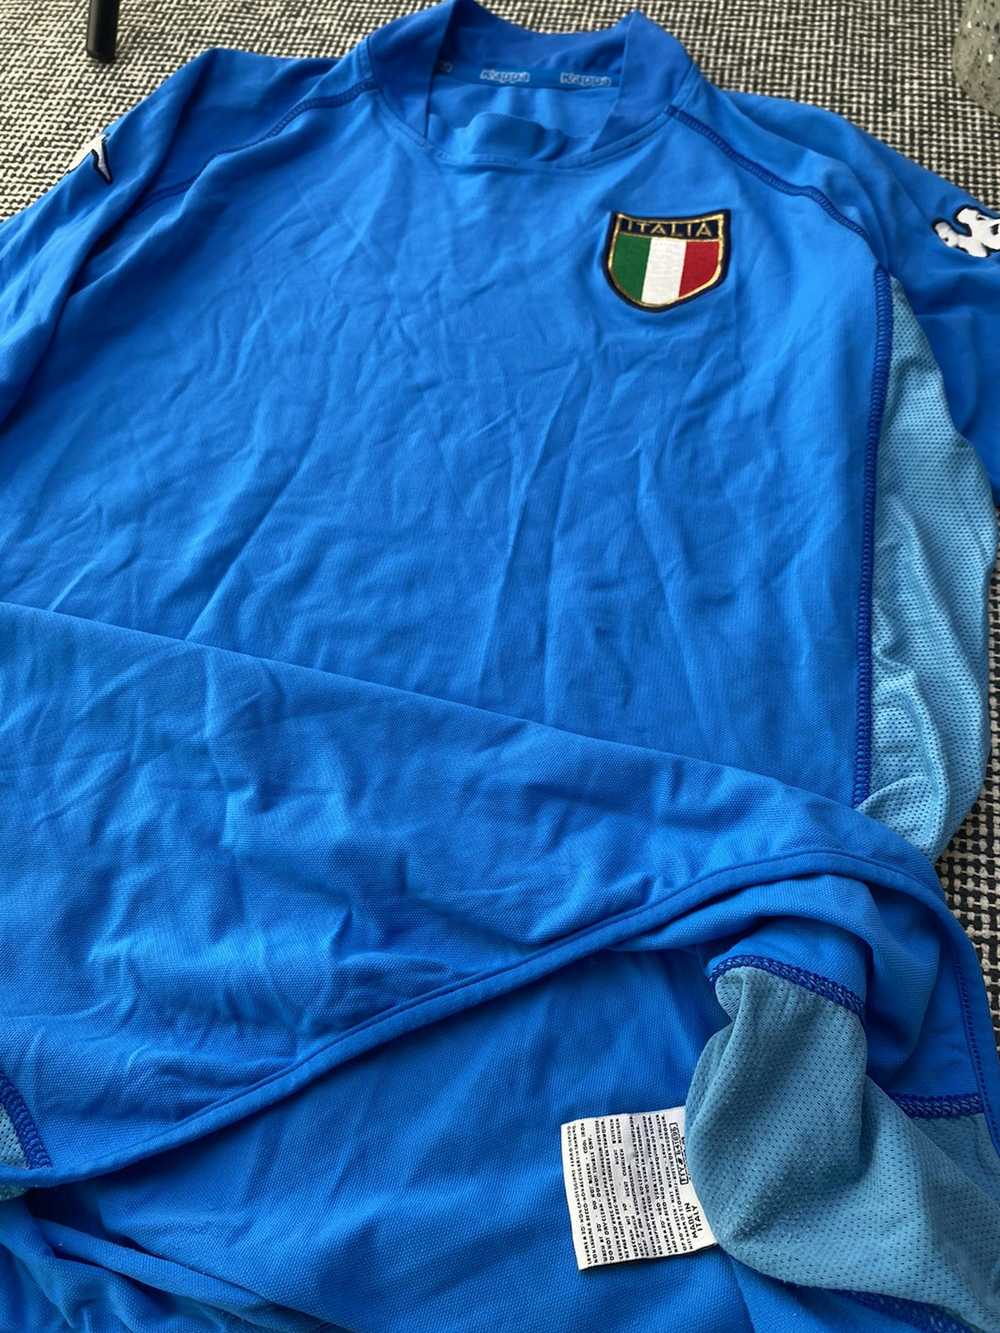 Kappa × Soccer Jersey × Vintage Italy kappa rare … - image 7